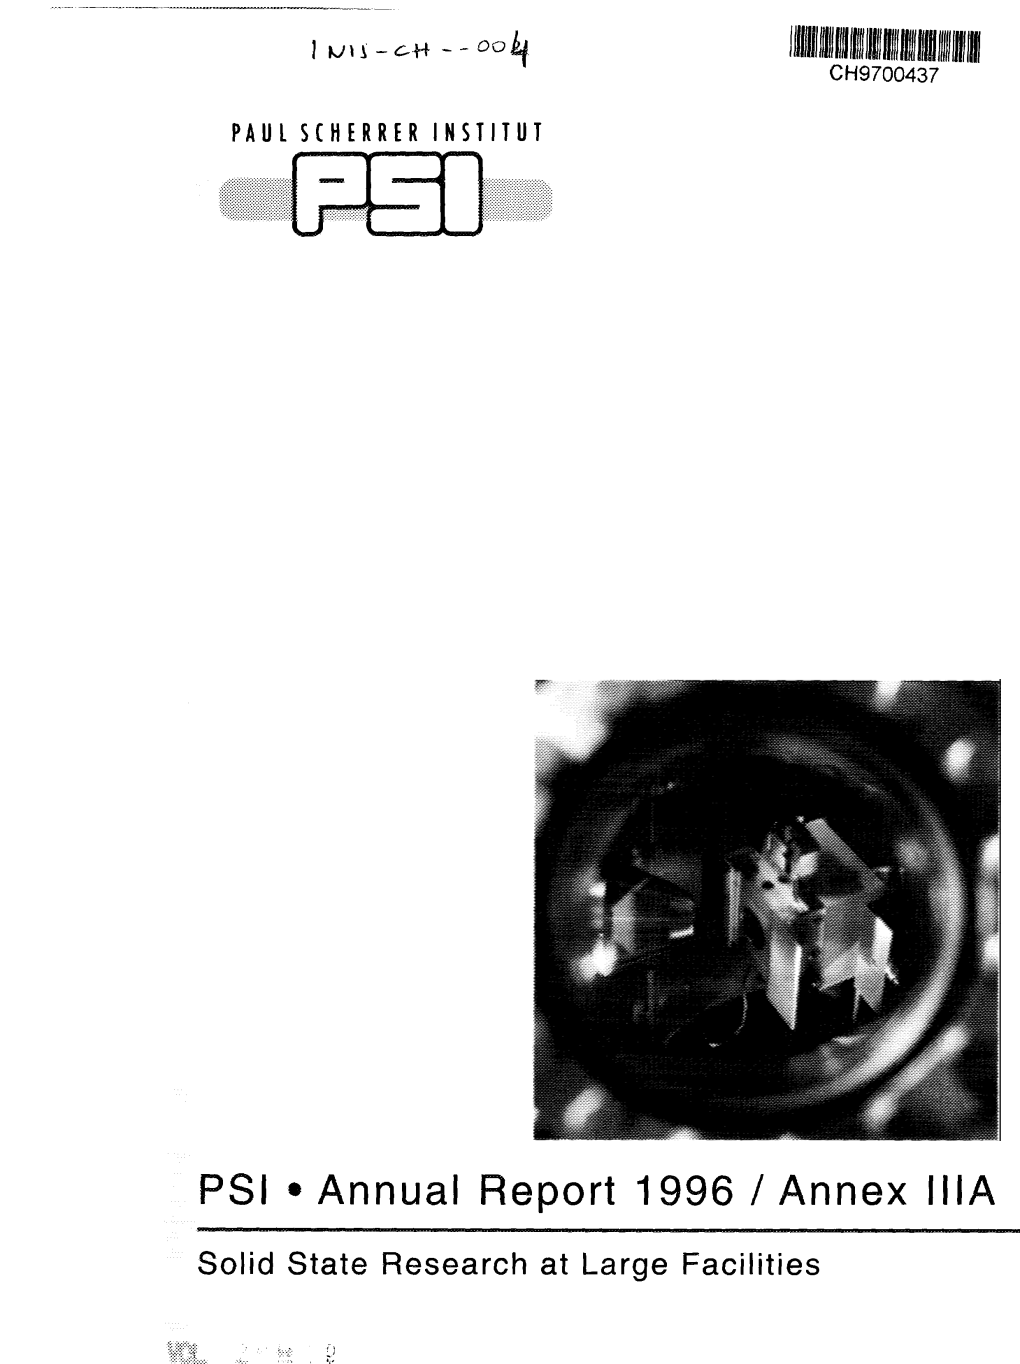 Paul Scherrer Institut Annual Report 1996. Annex IIIA: Solid State